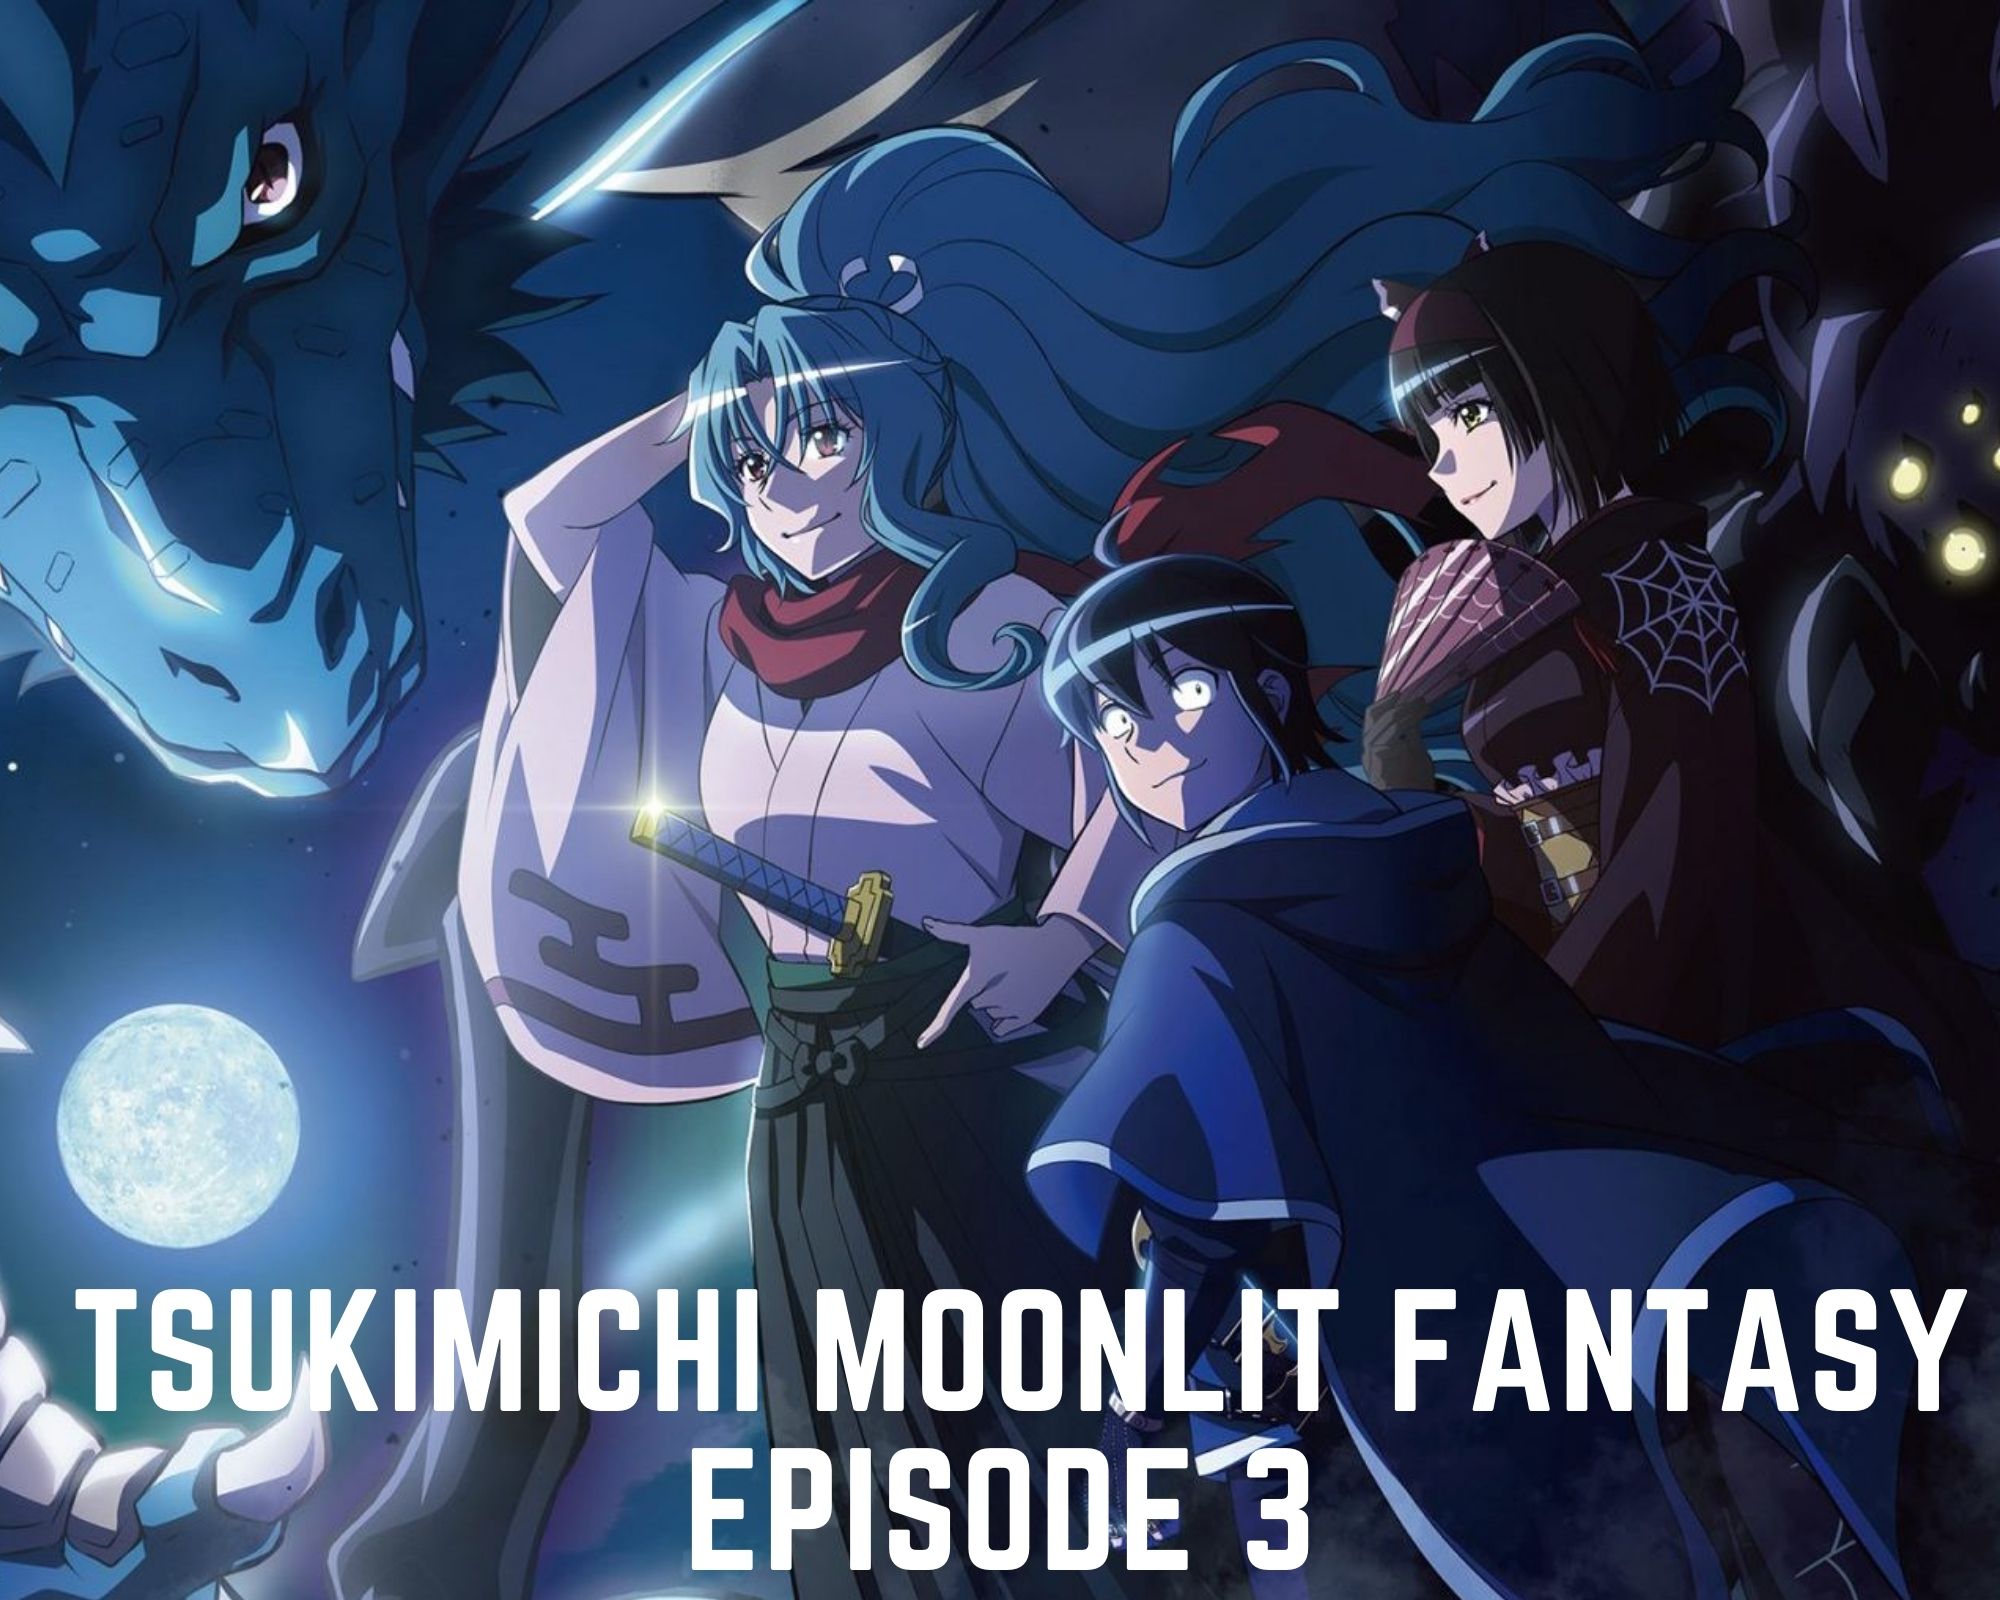 Tsukimichi moonlit fantasy season 3